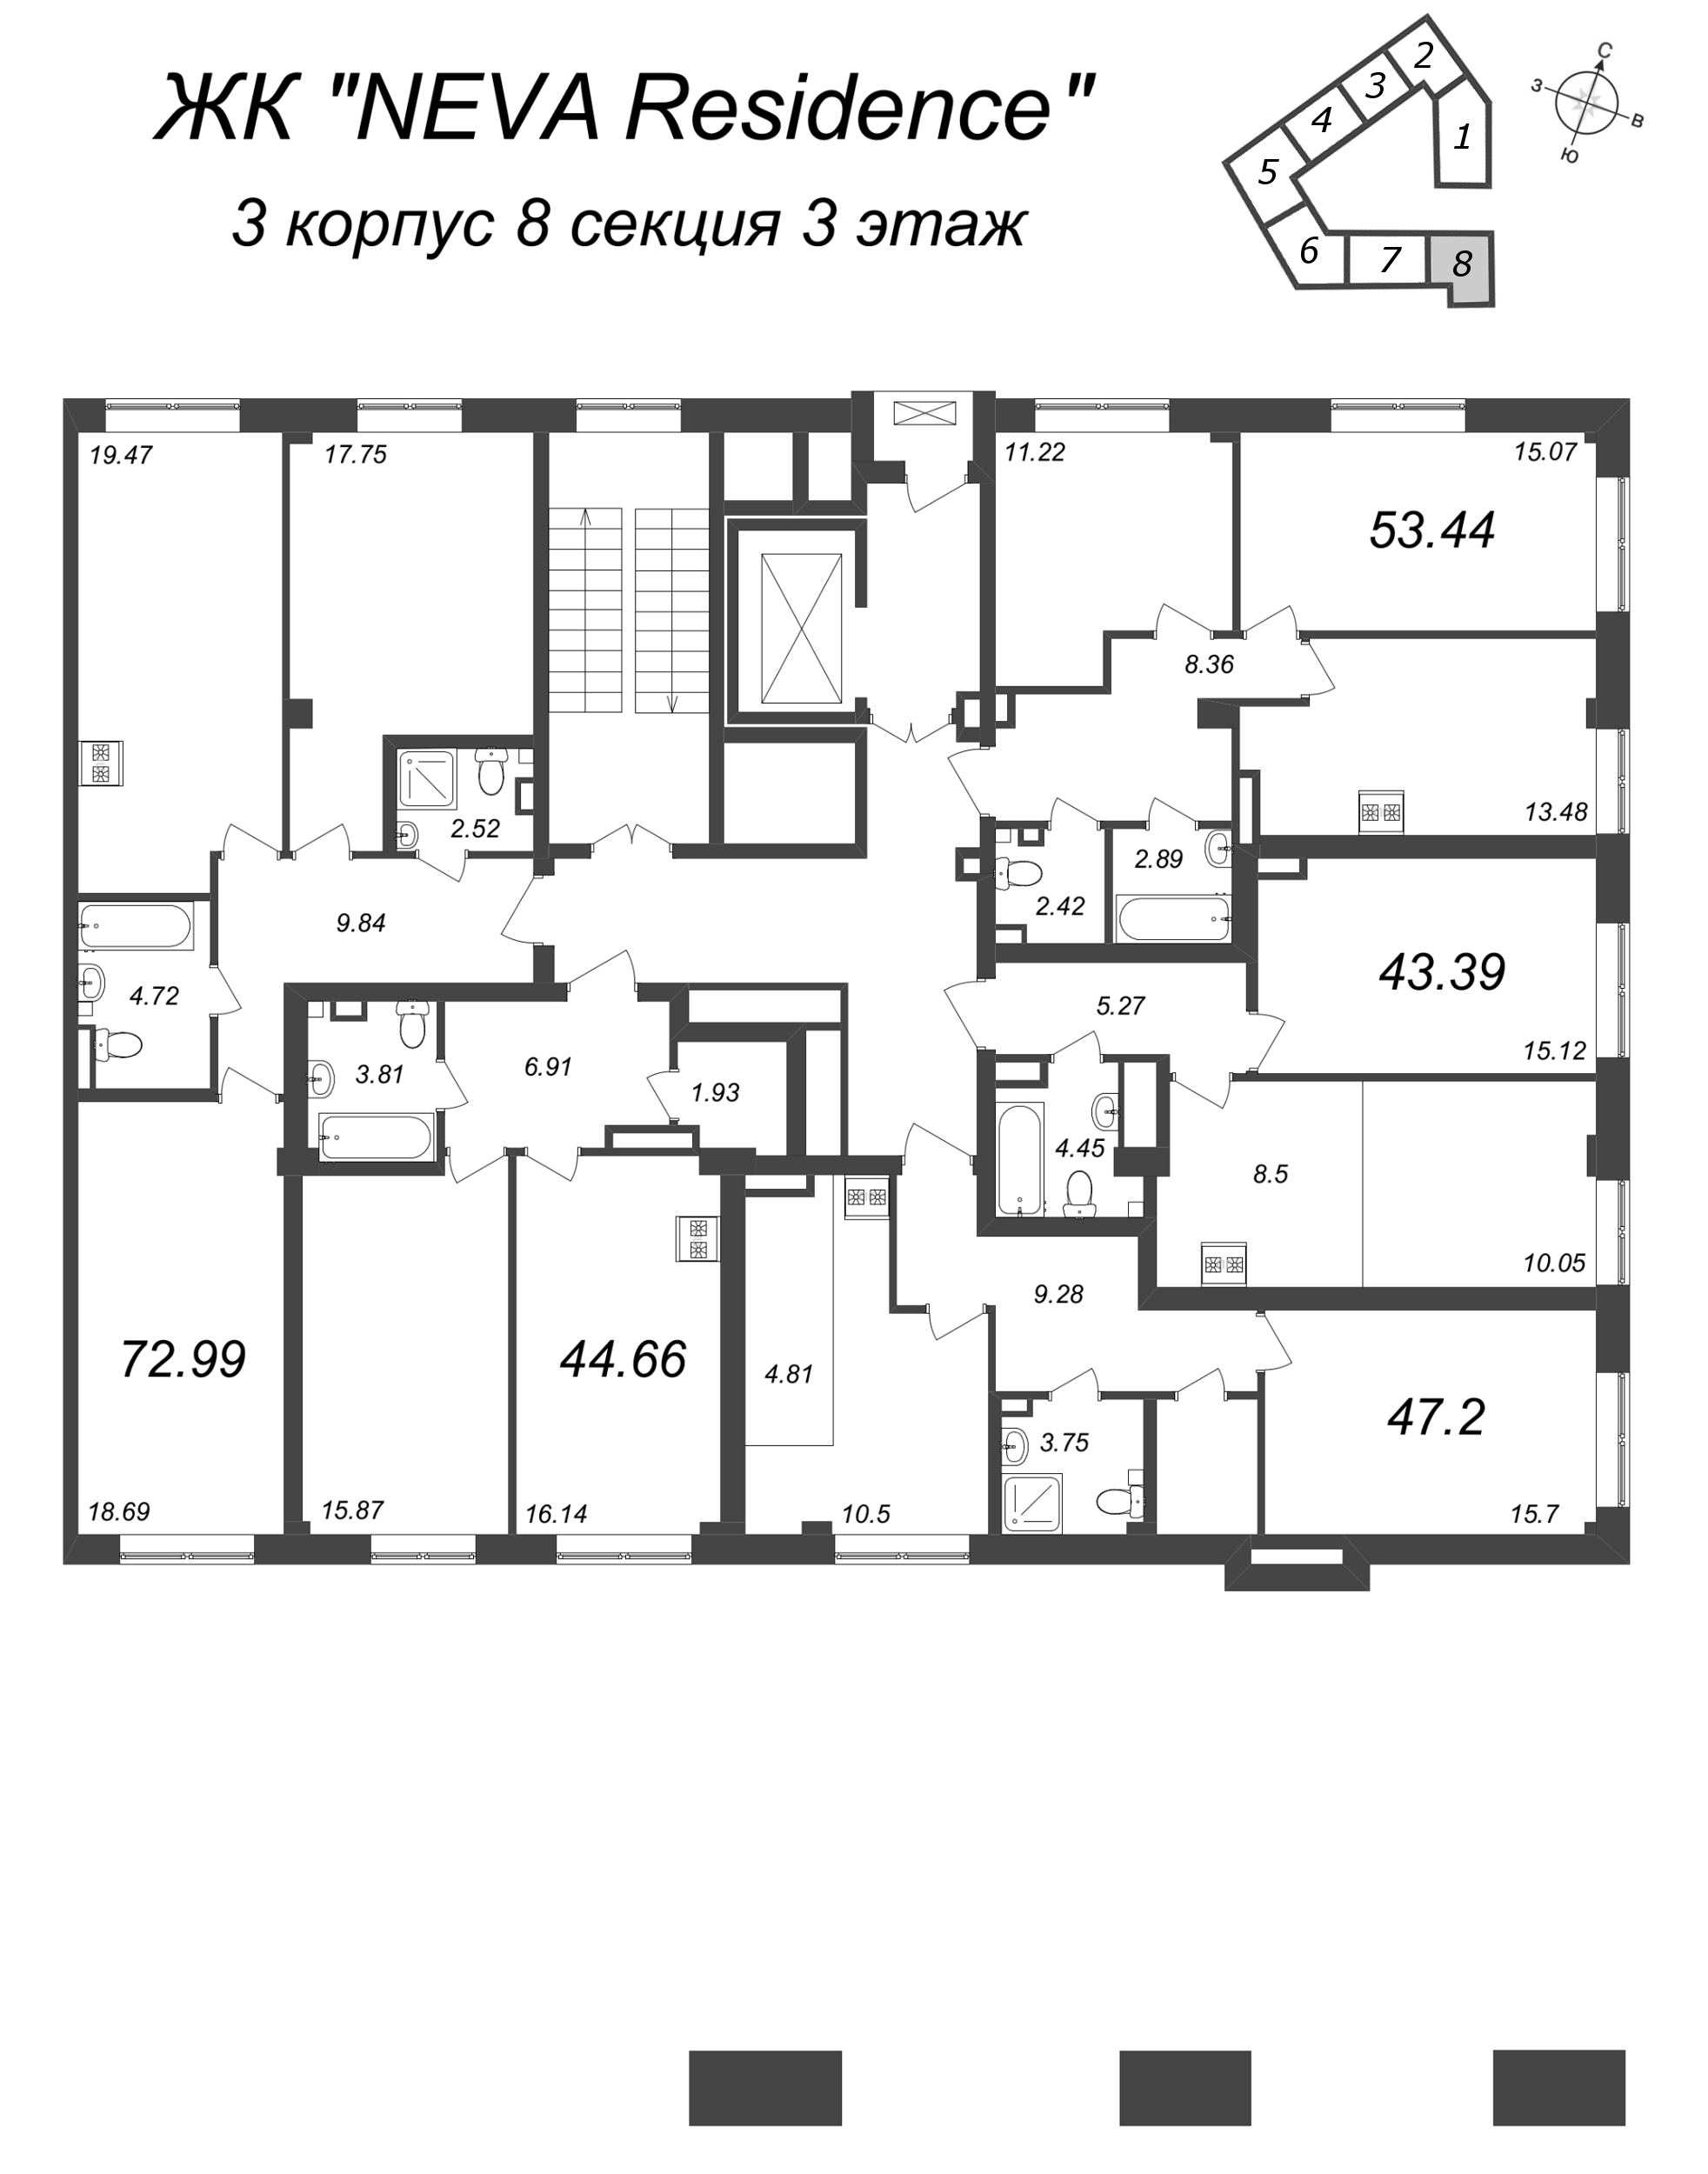 2-комнатная (Евро) квартира, 44.66 м² - планировка этажа